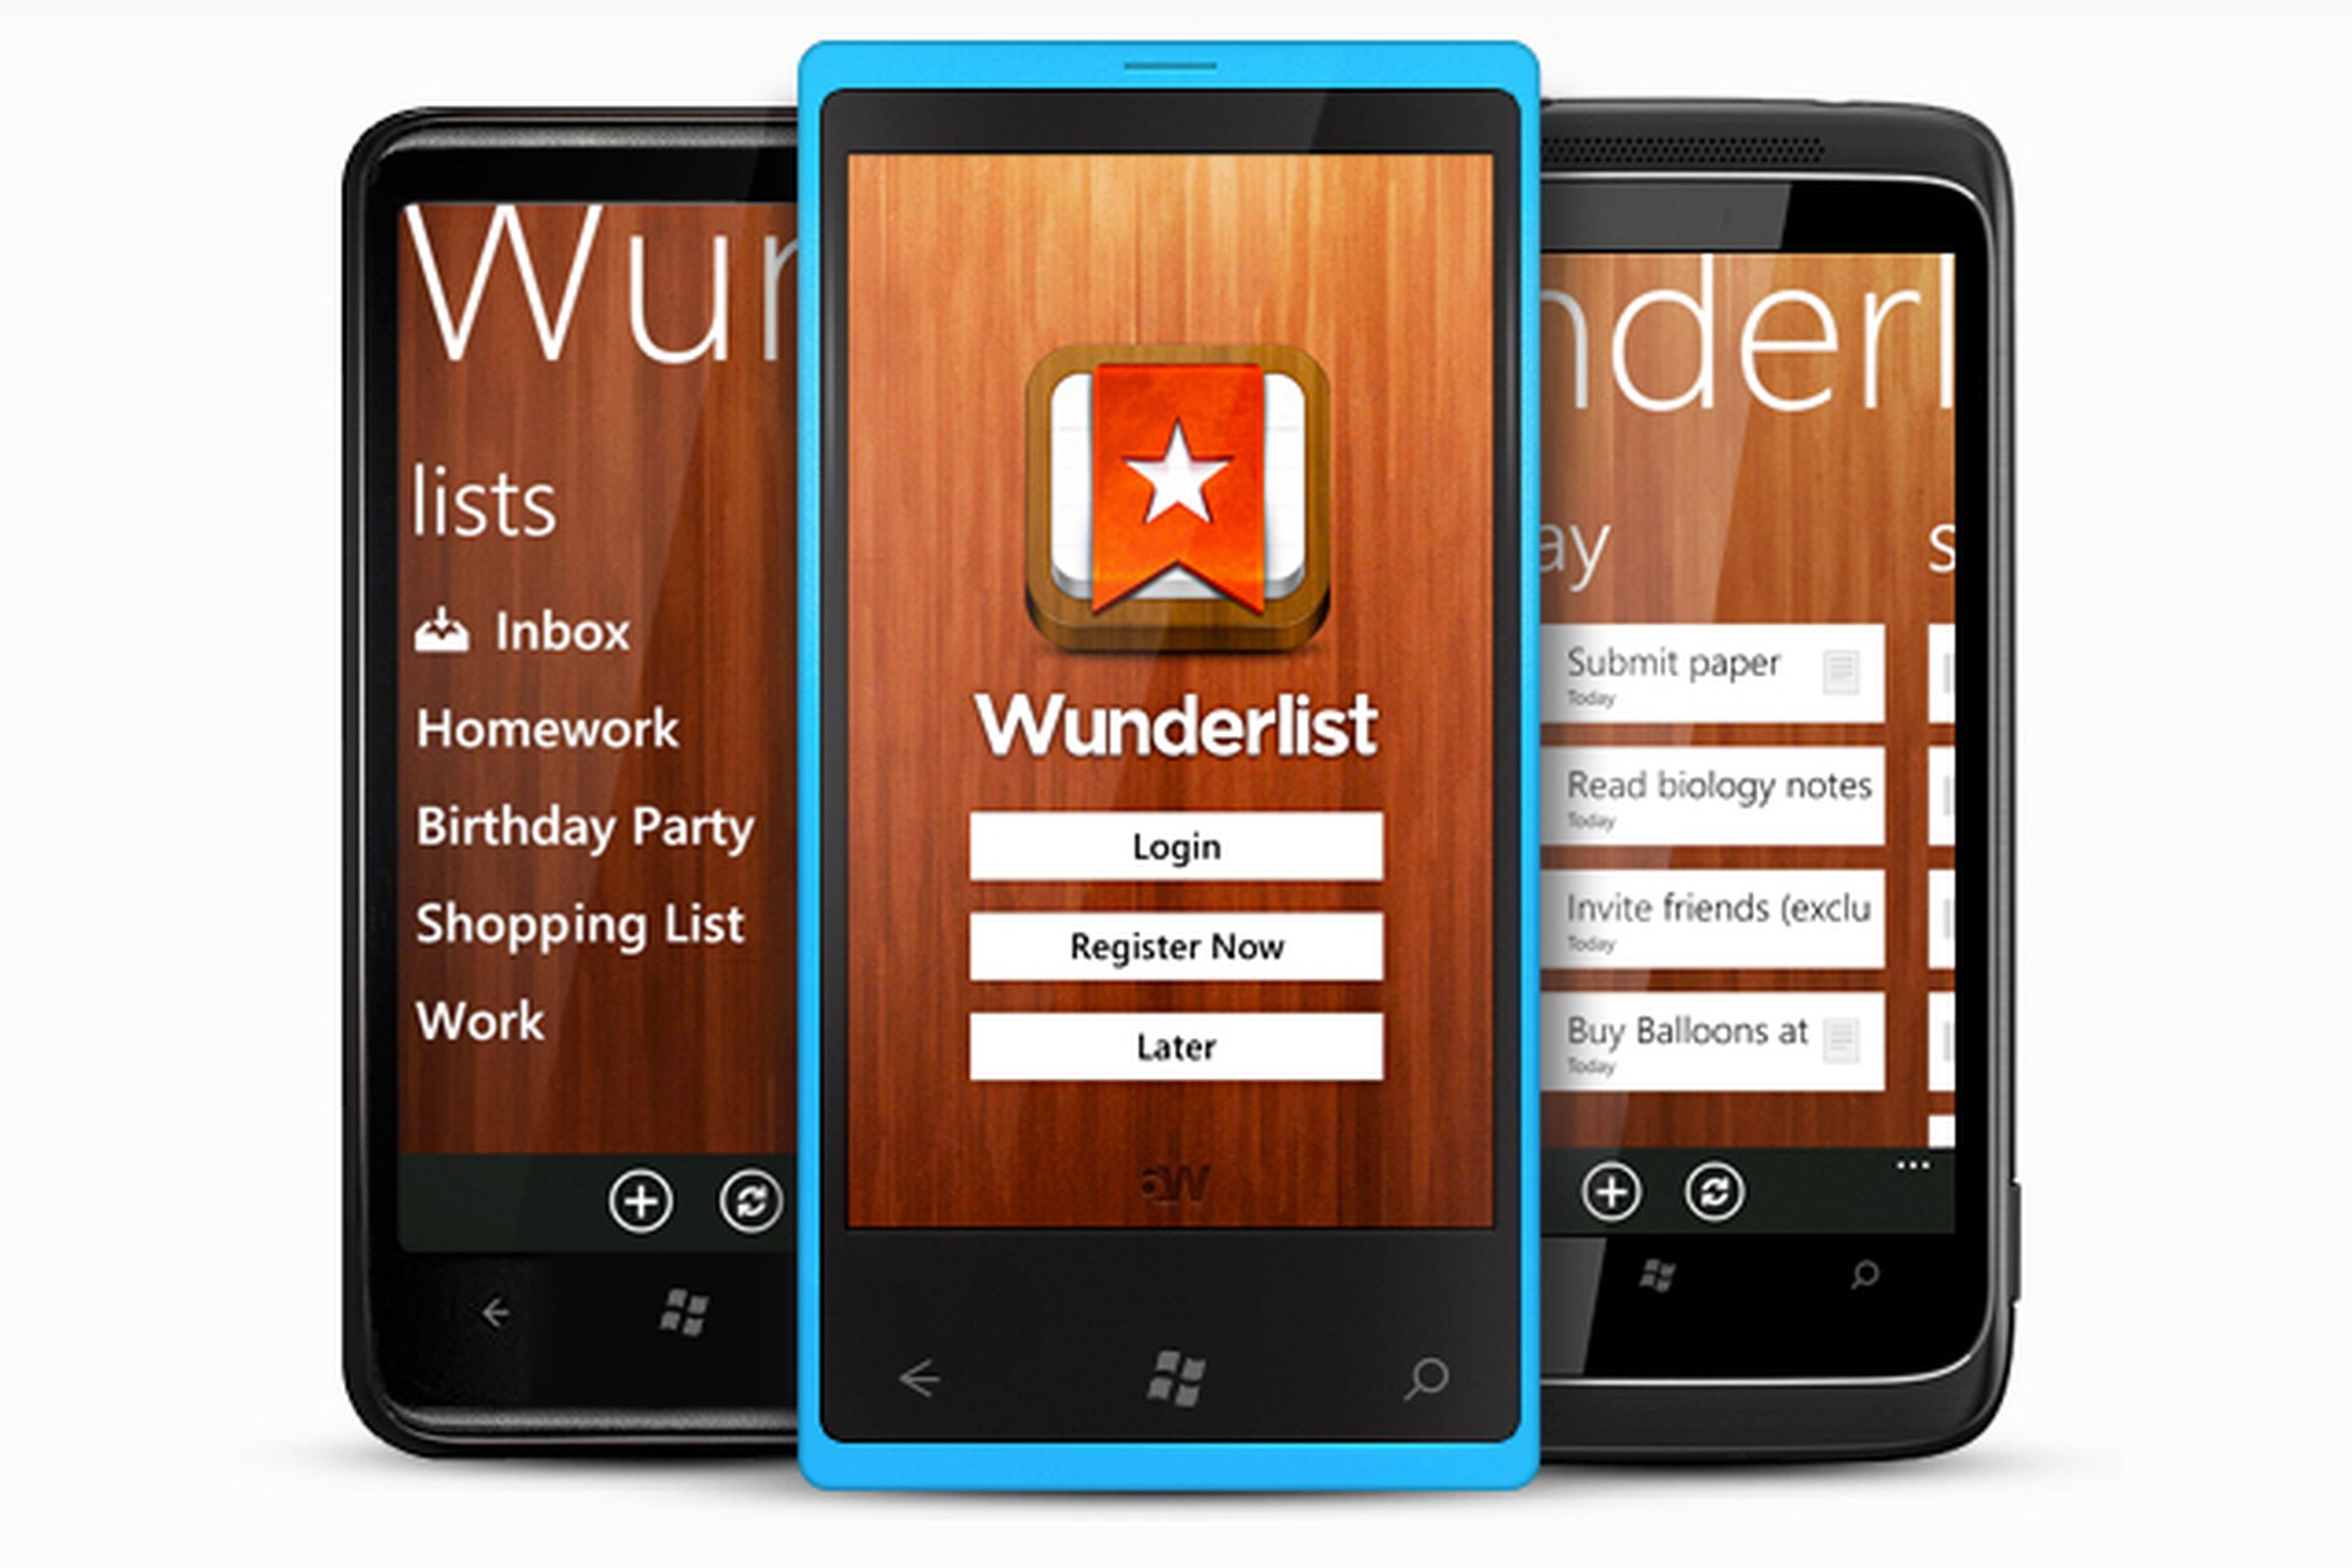 Wunderlist for Windows Phone